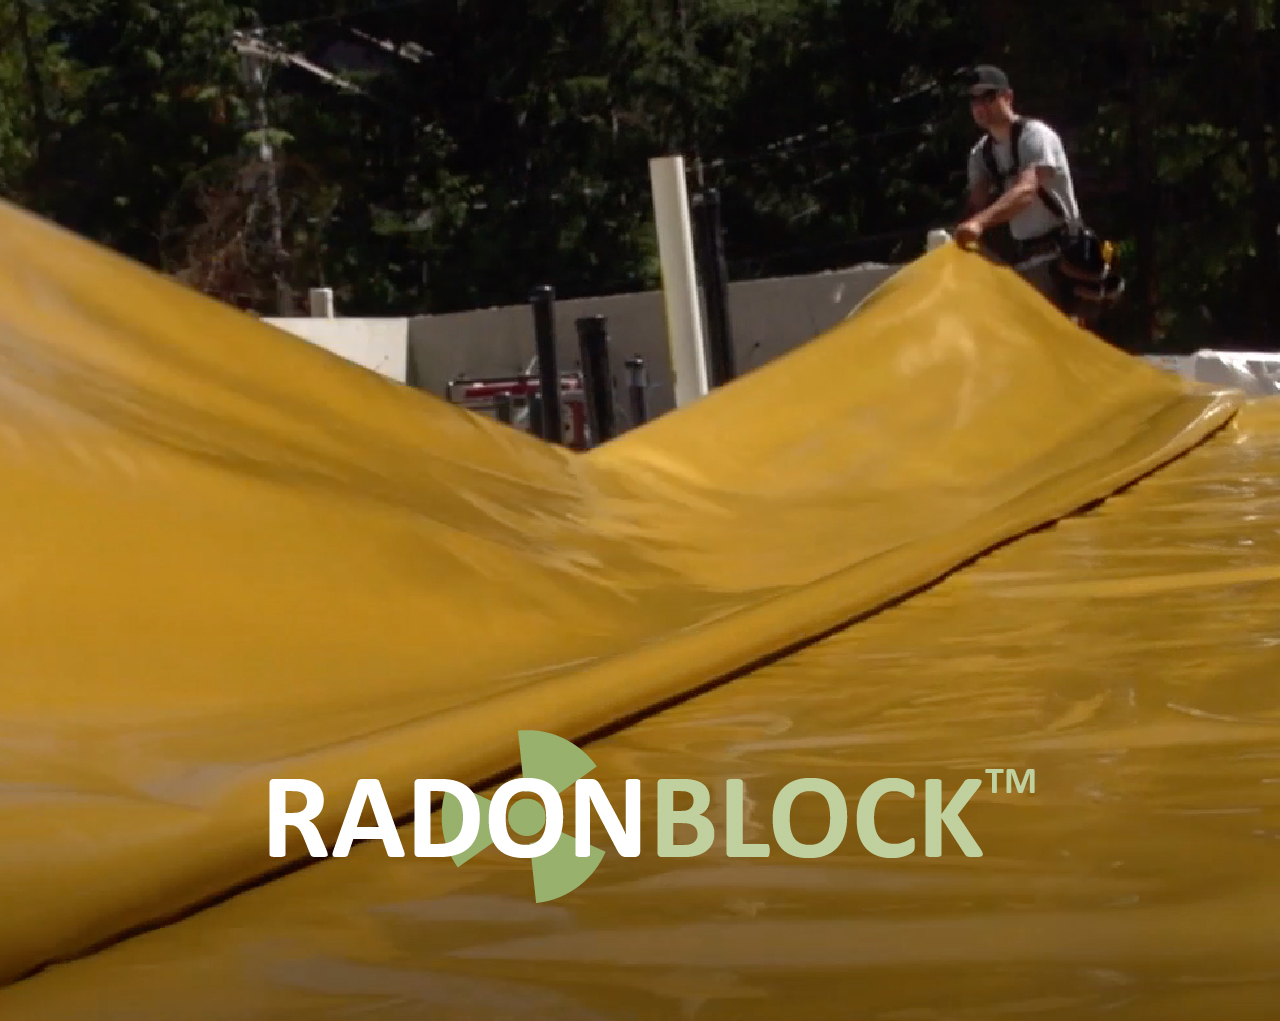 RadonBlock08logo-01.jpg